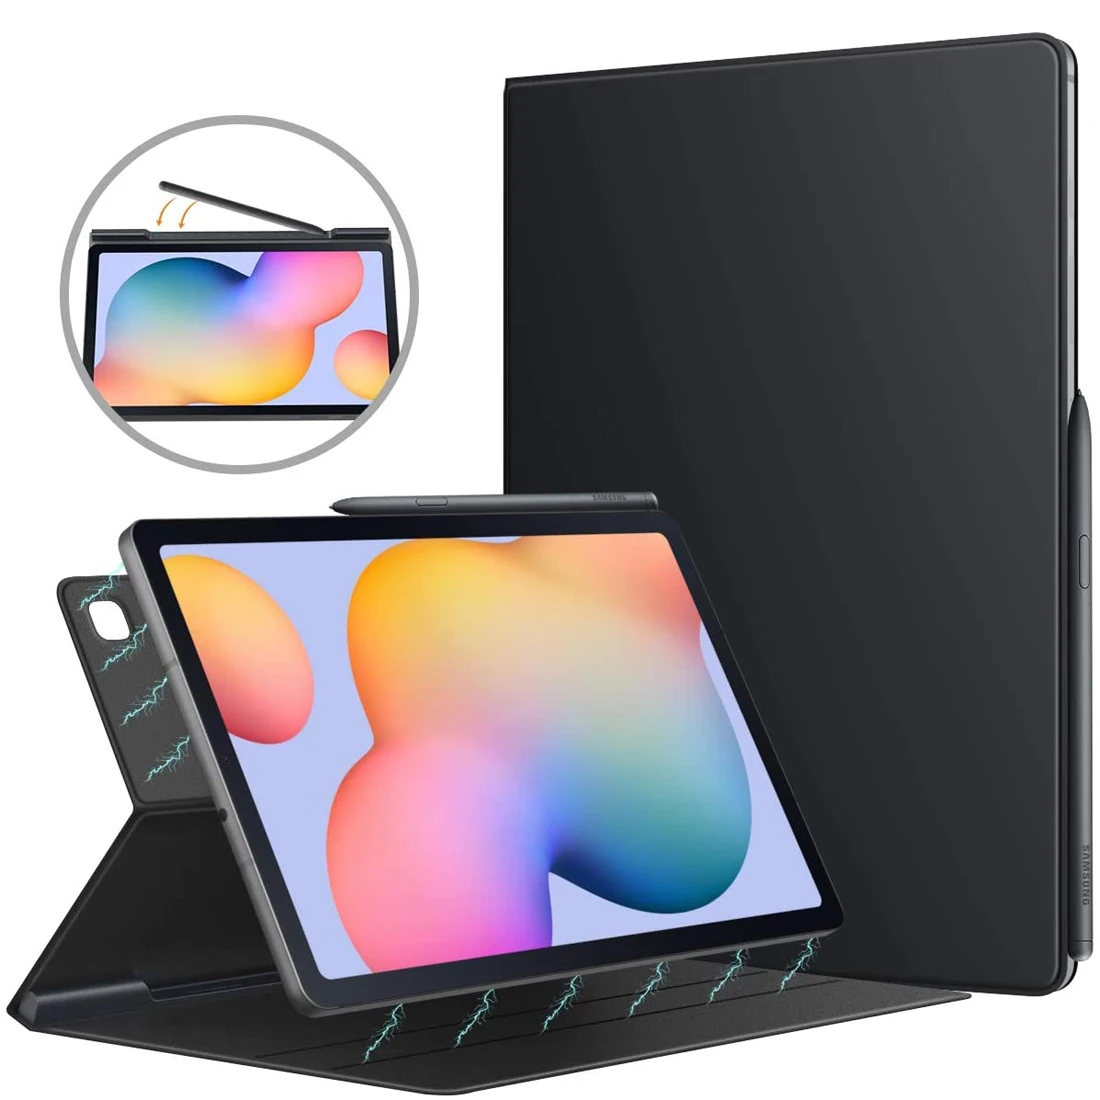 Tanie Etui na Tablet do tabletu Galaxy Tab S6 Lite 2020,